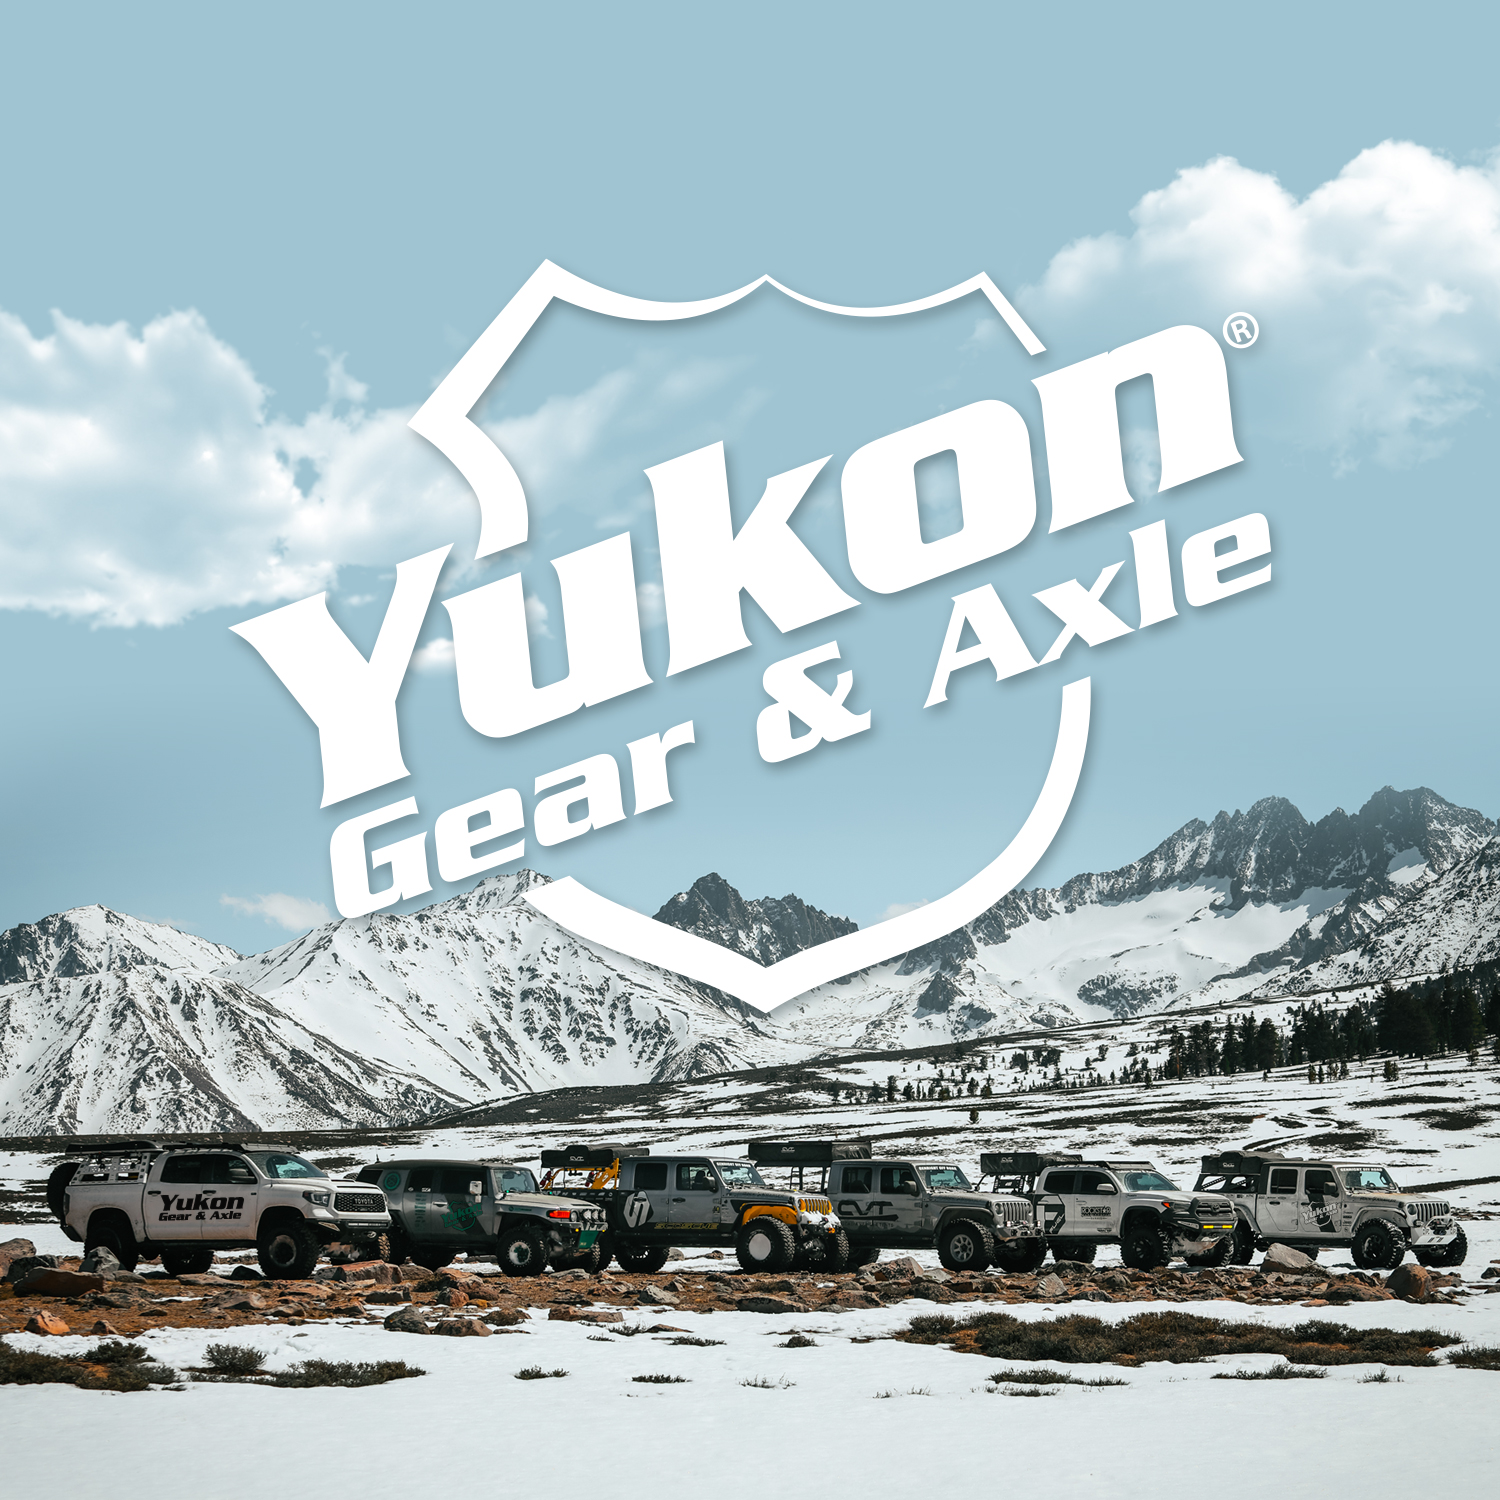 Yukon high performance replacement ring & pinion gear set, Dana 70, 4.88 ratio 